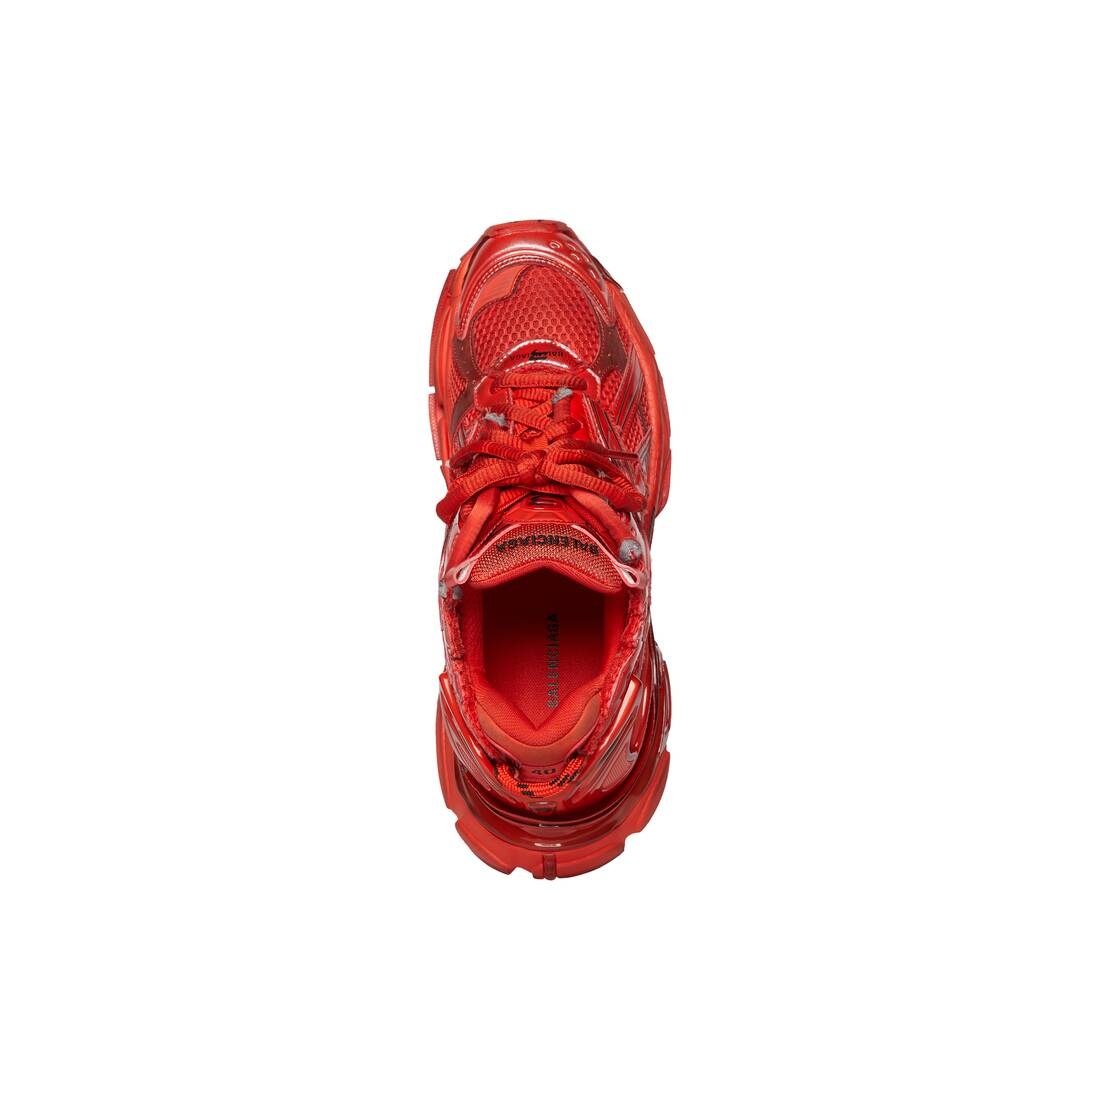 Men's Runner Sneaker in Red - 6